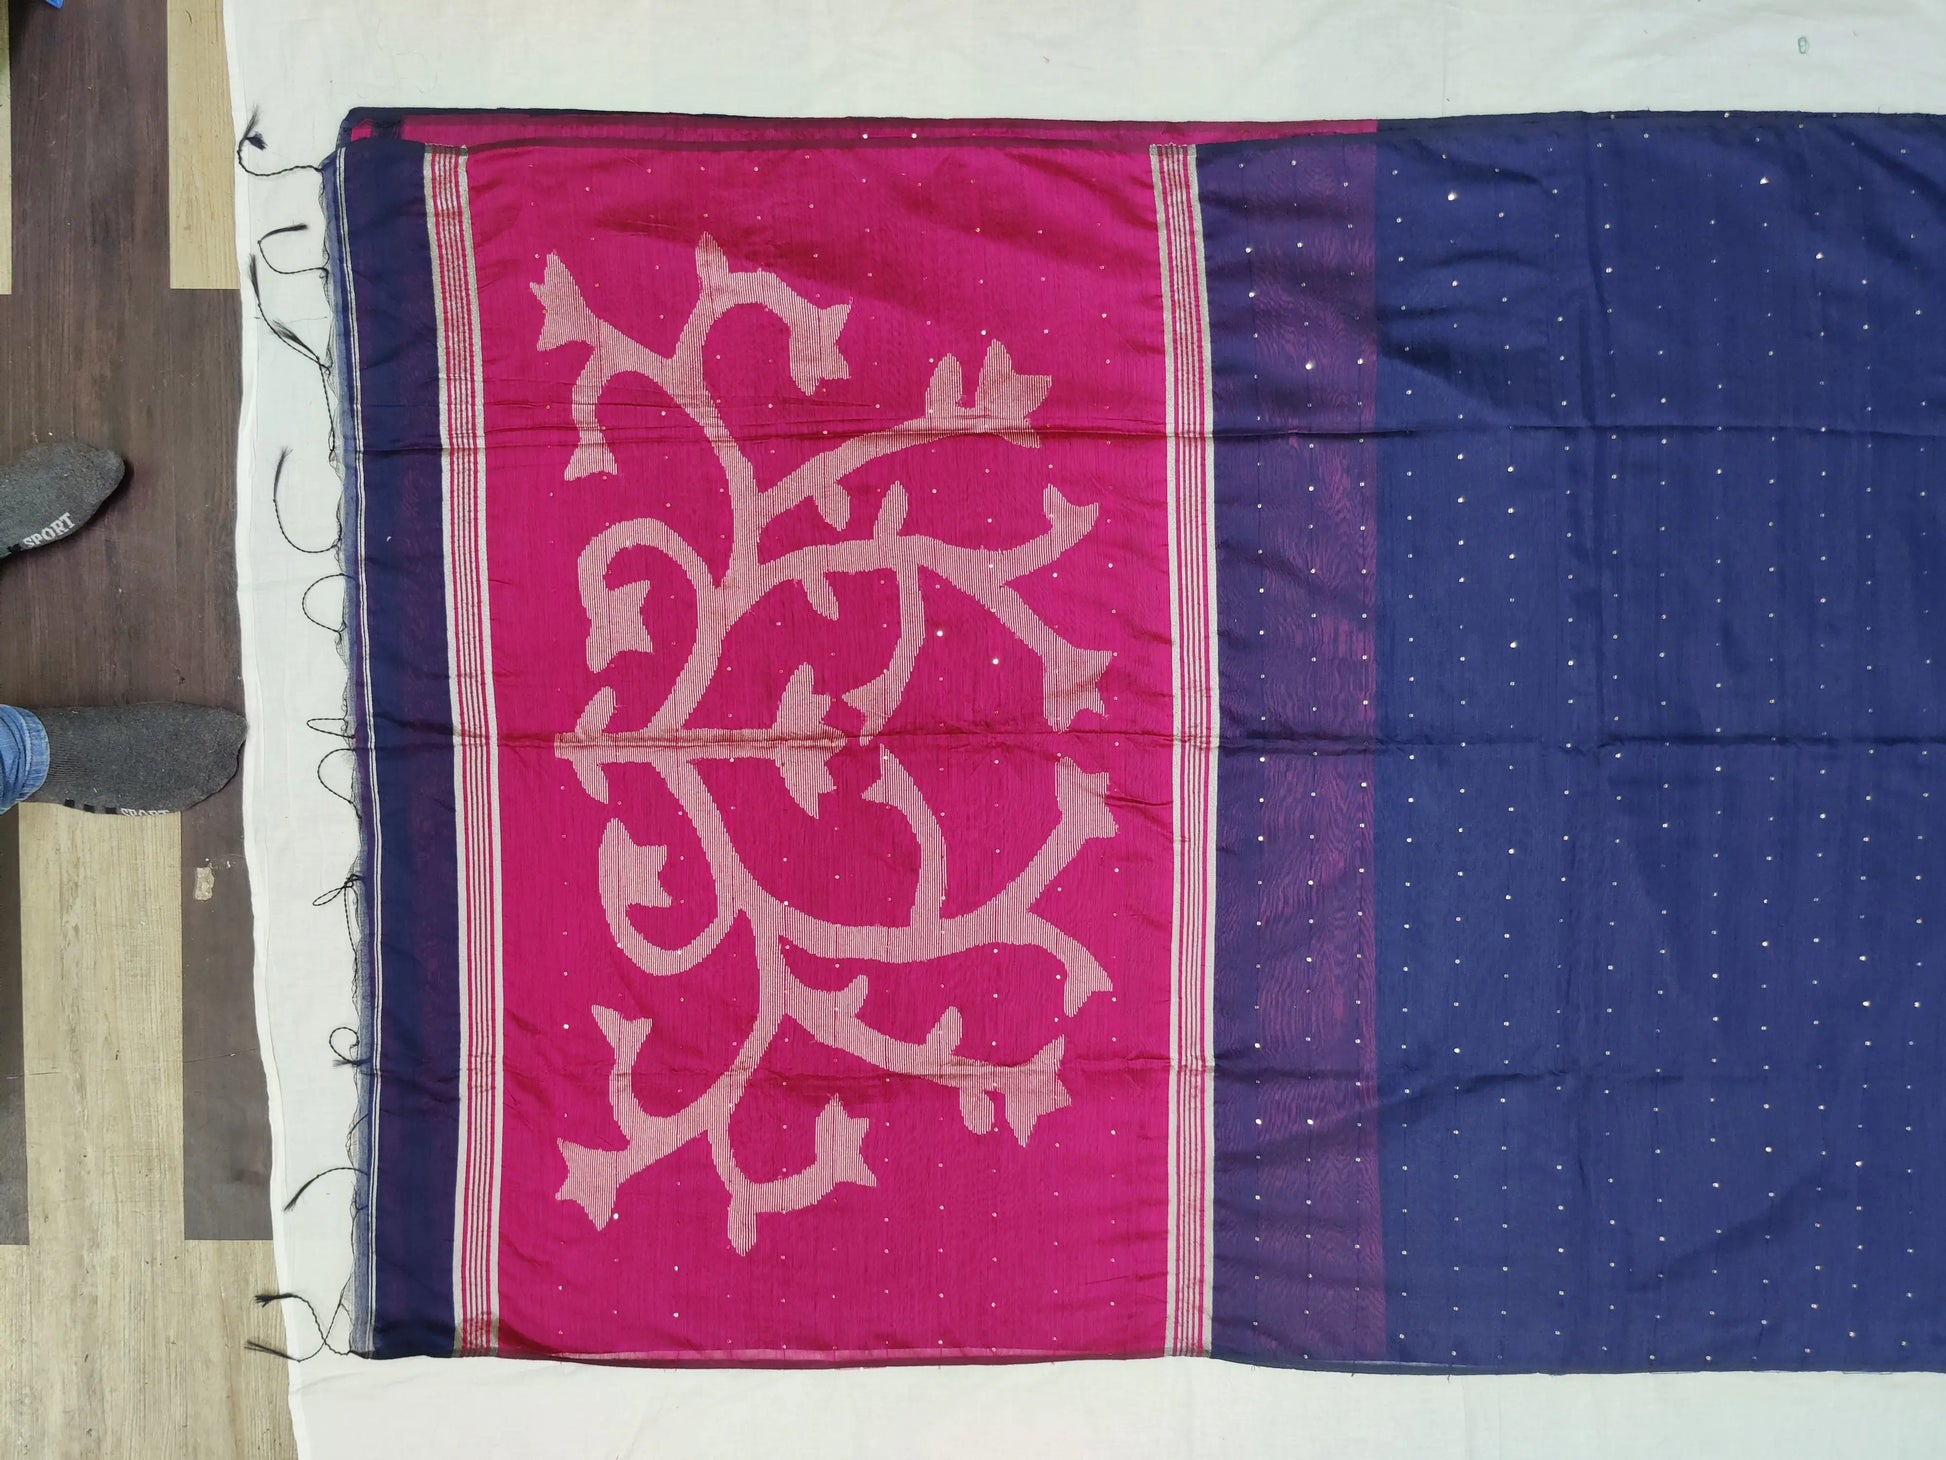 sequence Jamdani saree pink blue Putul's fashion